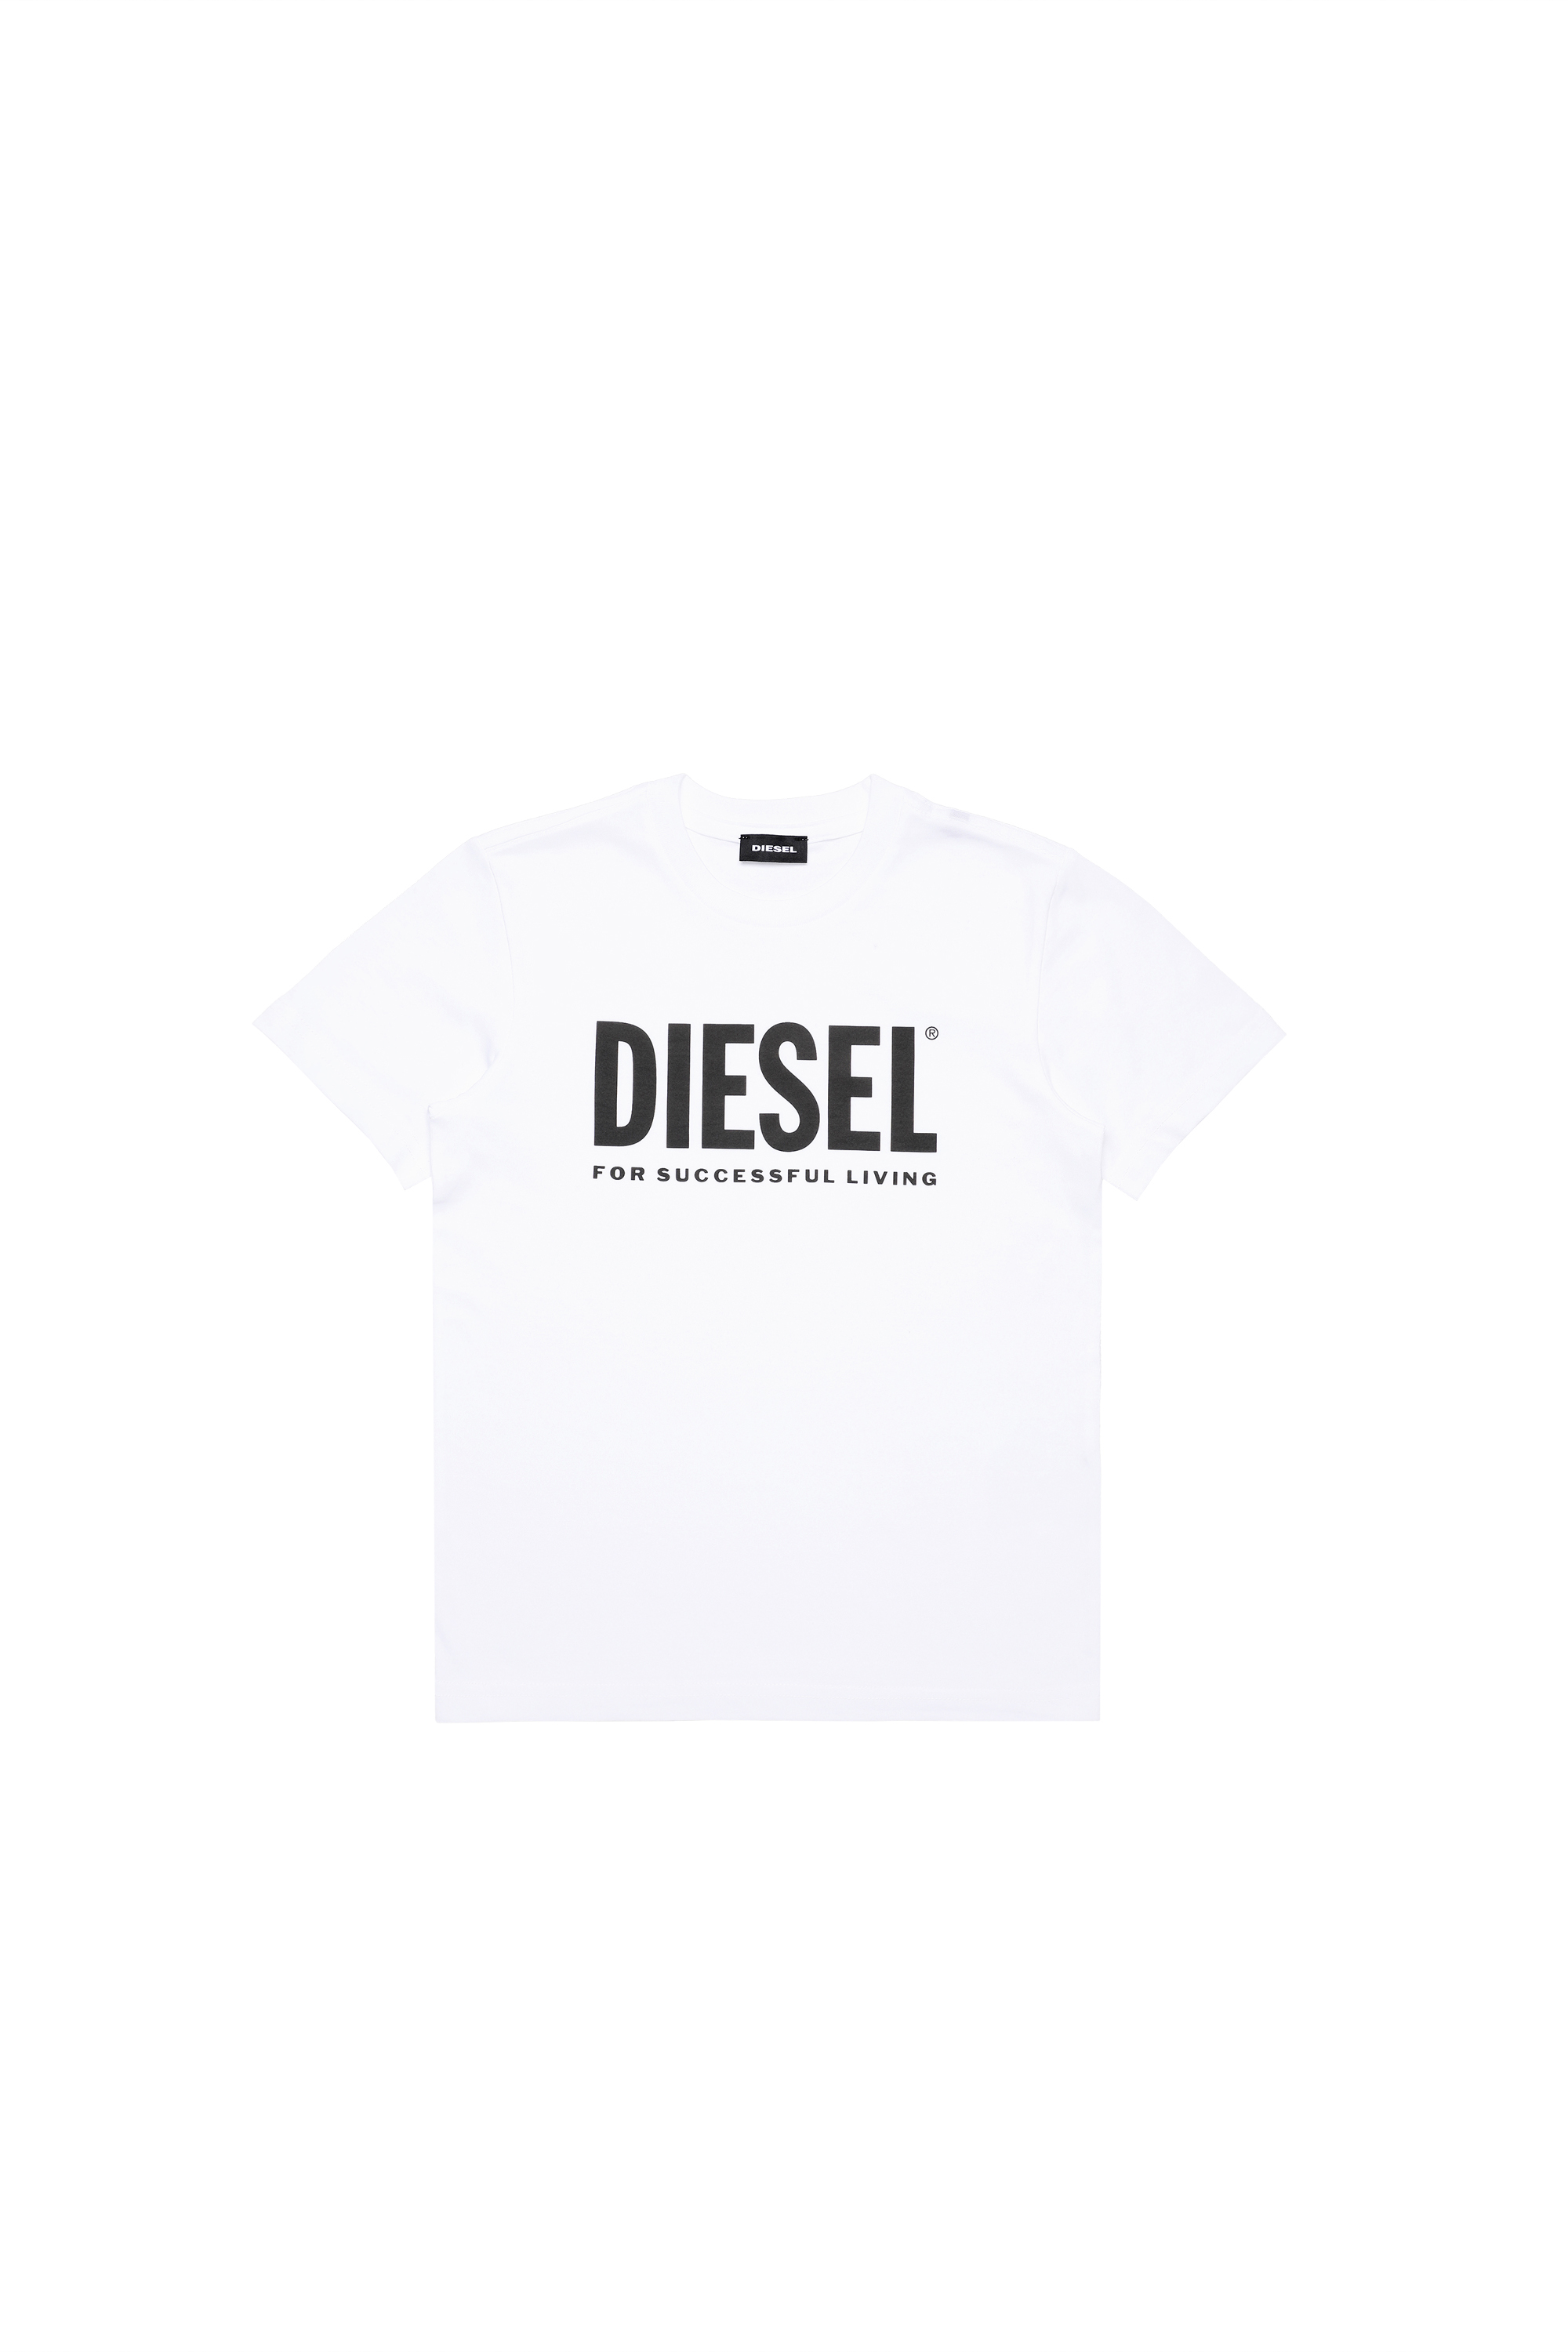 Diesel - TJUSTLOGO, White - Image 1